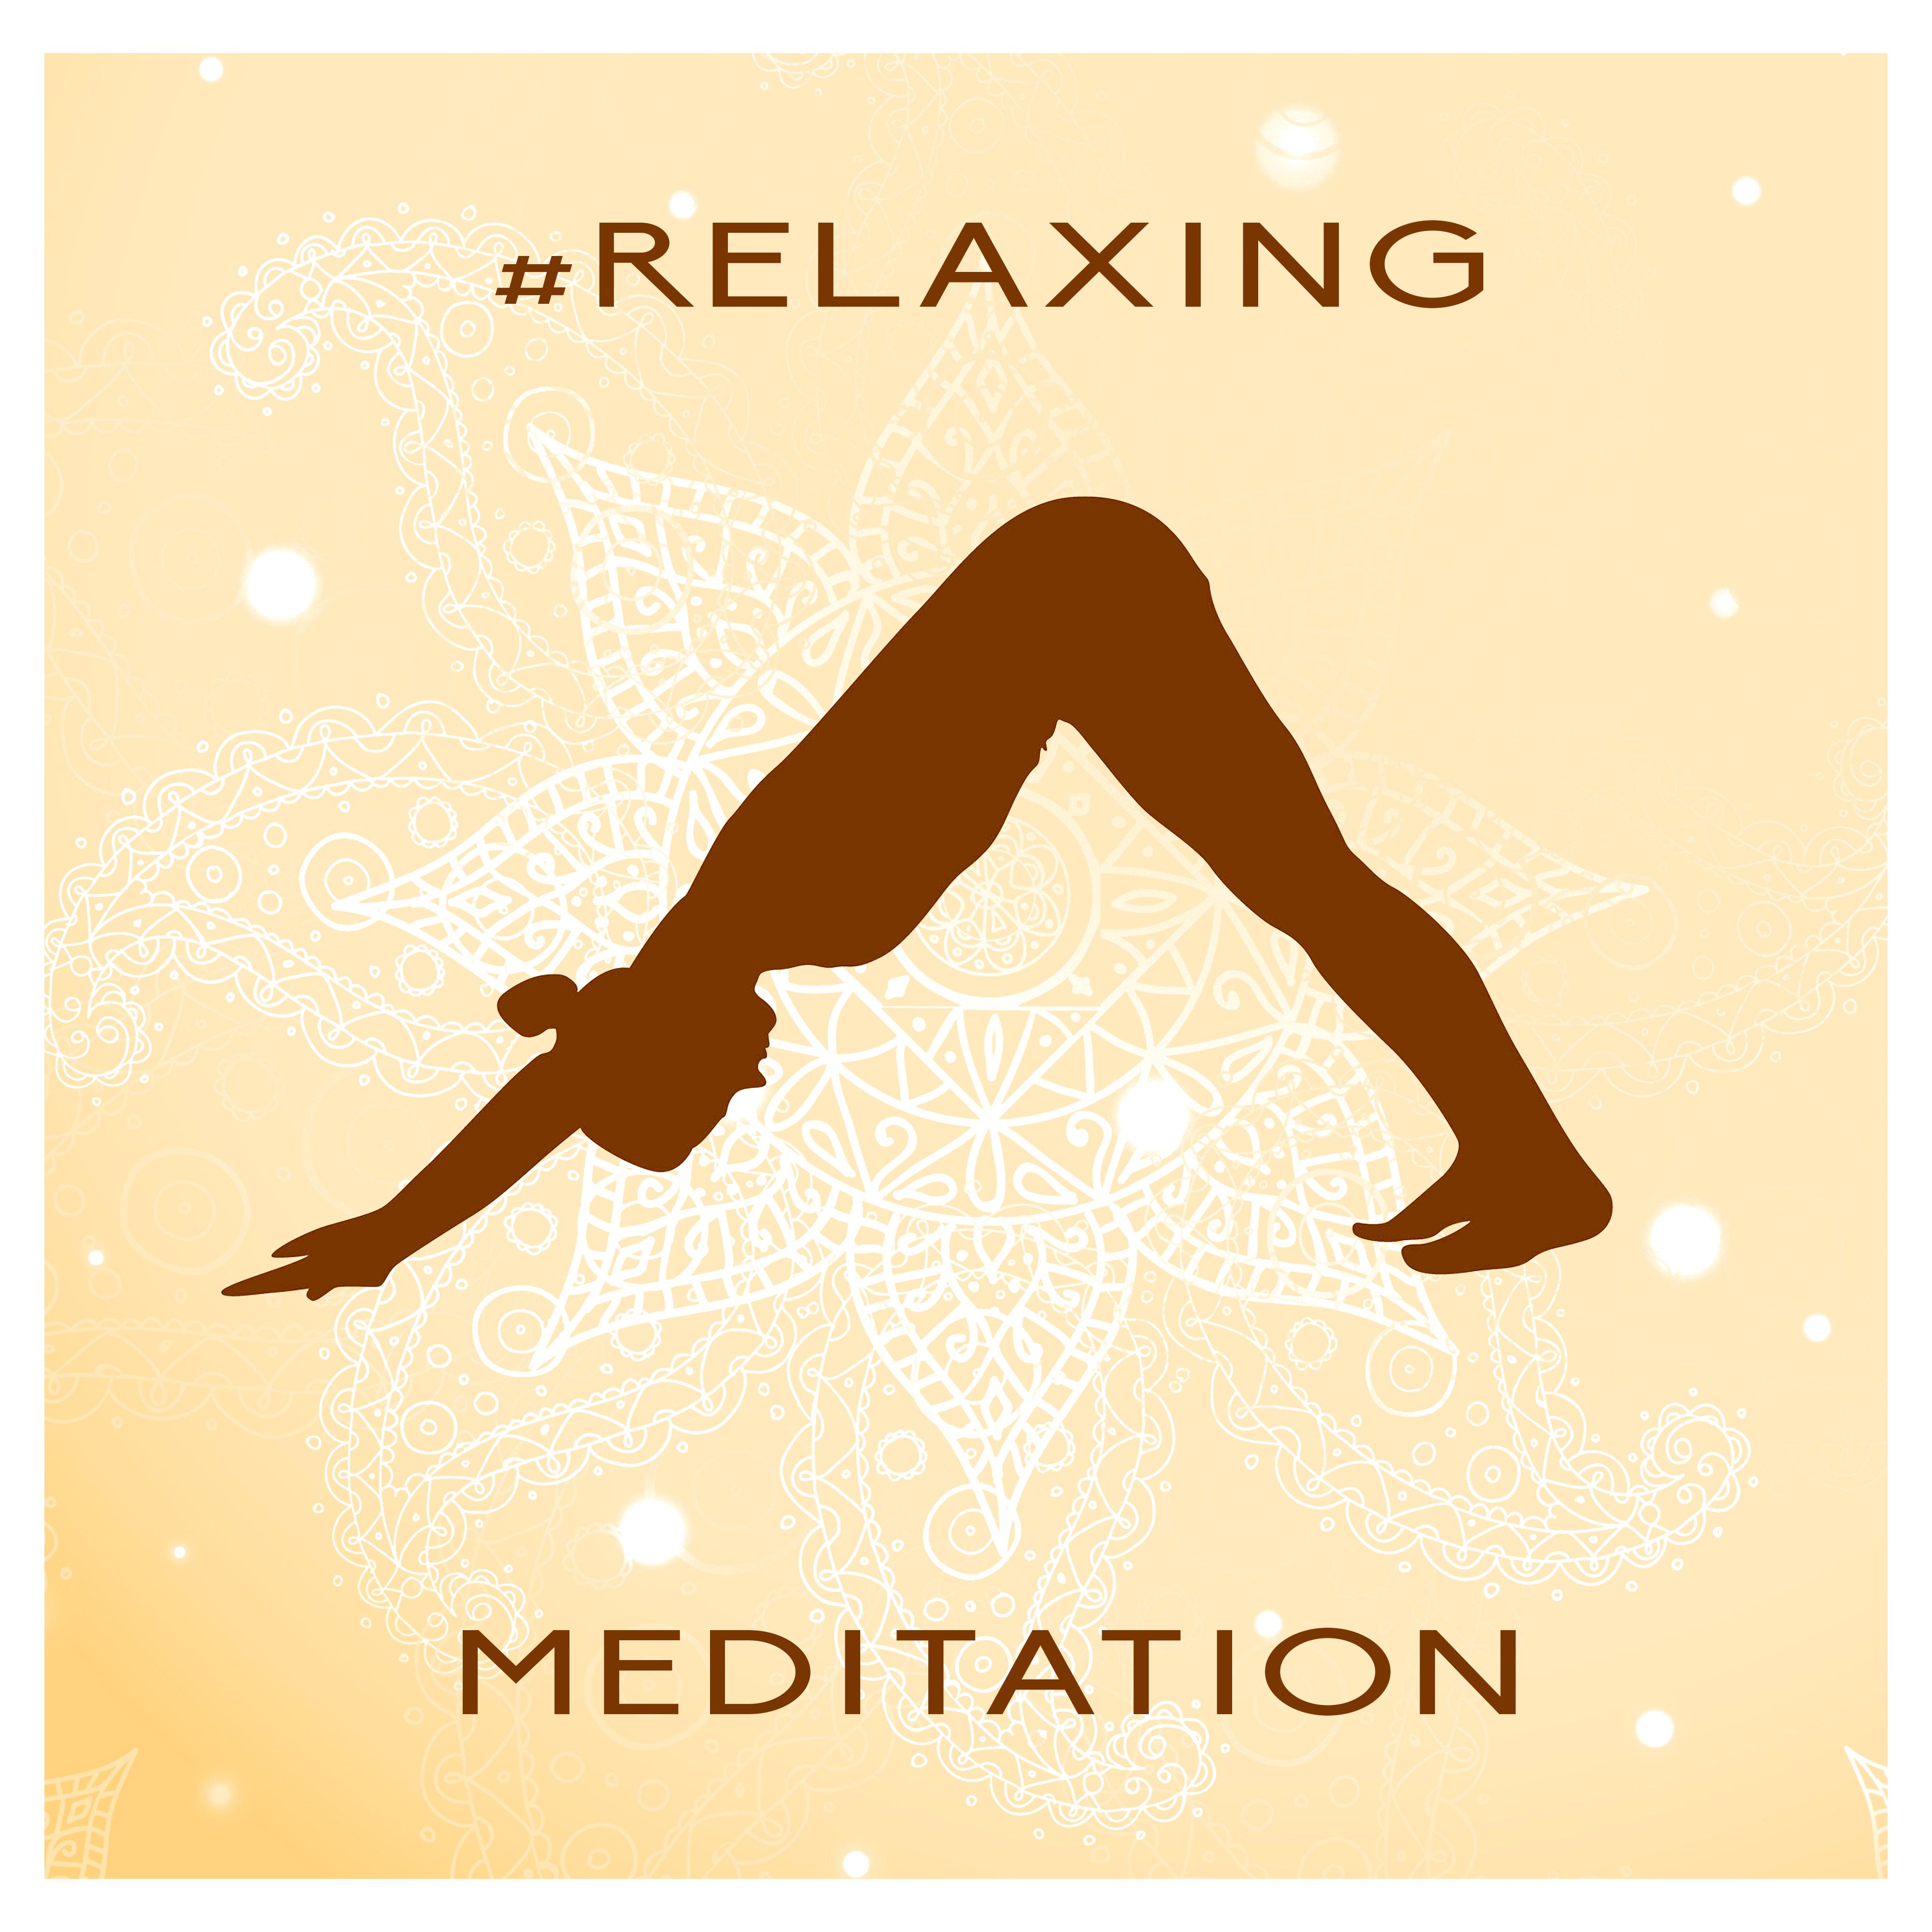 #Relaxing Meditation